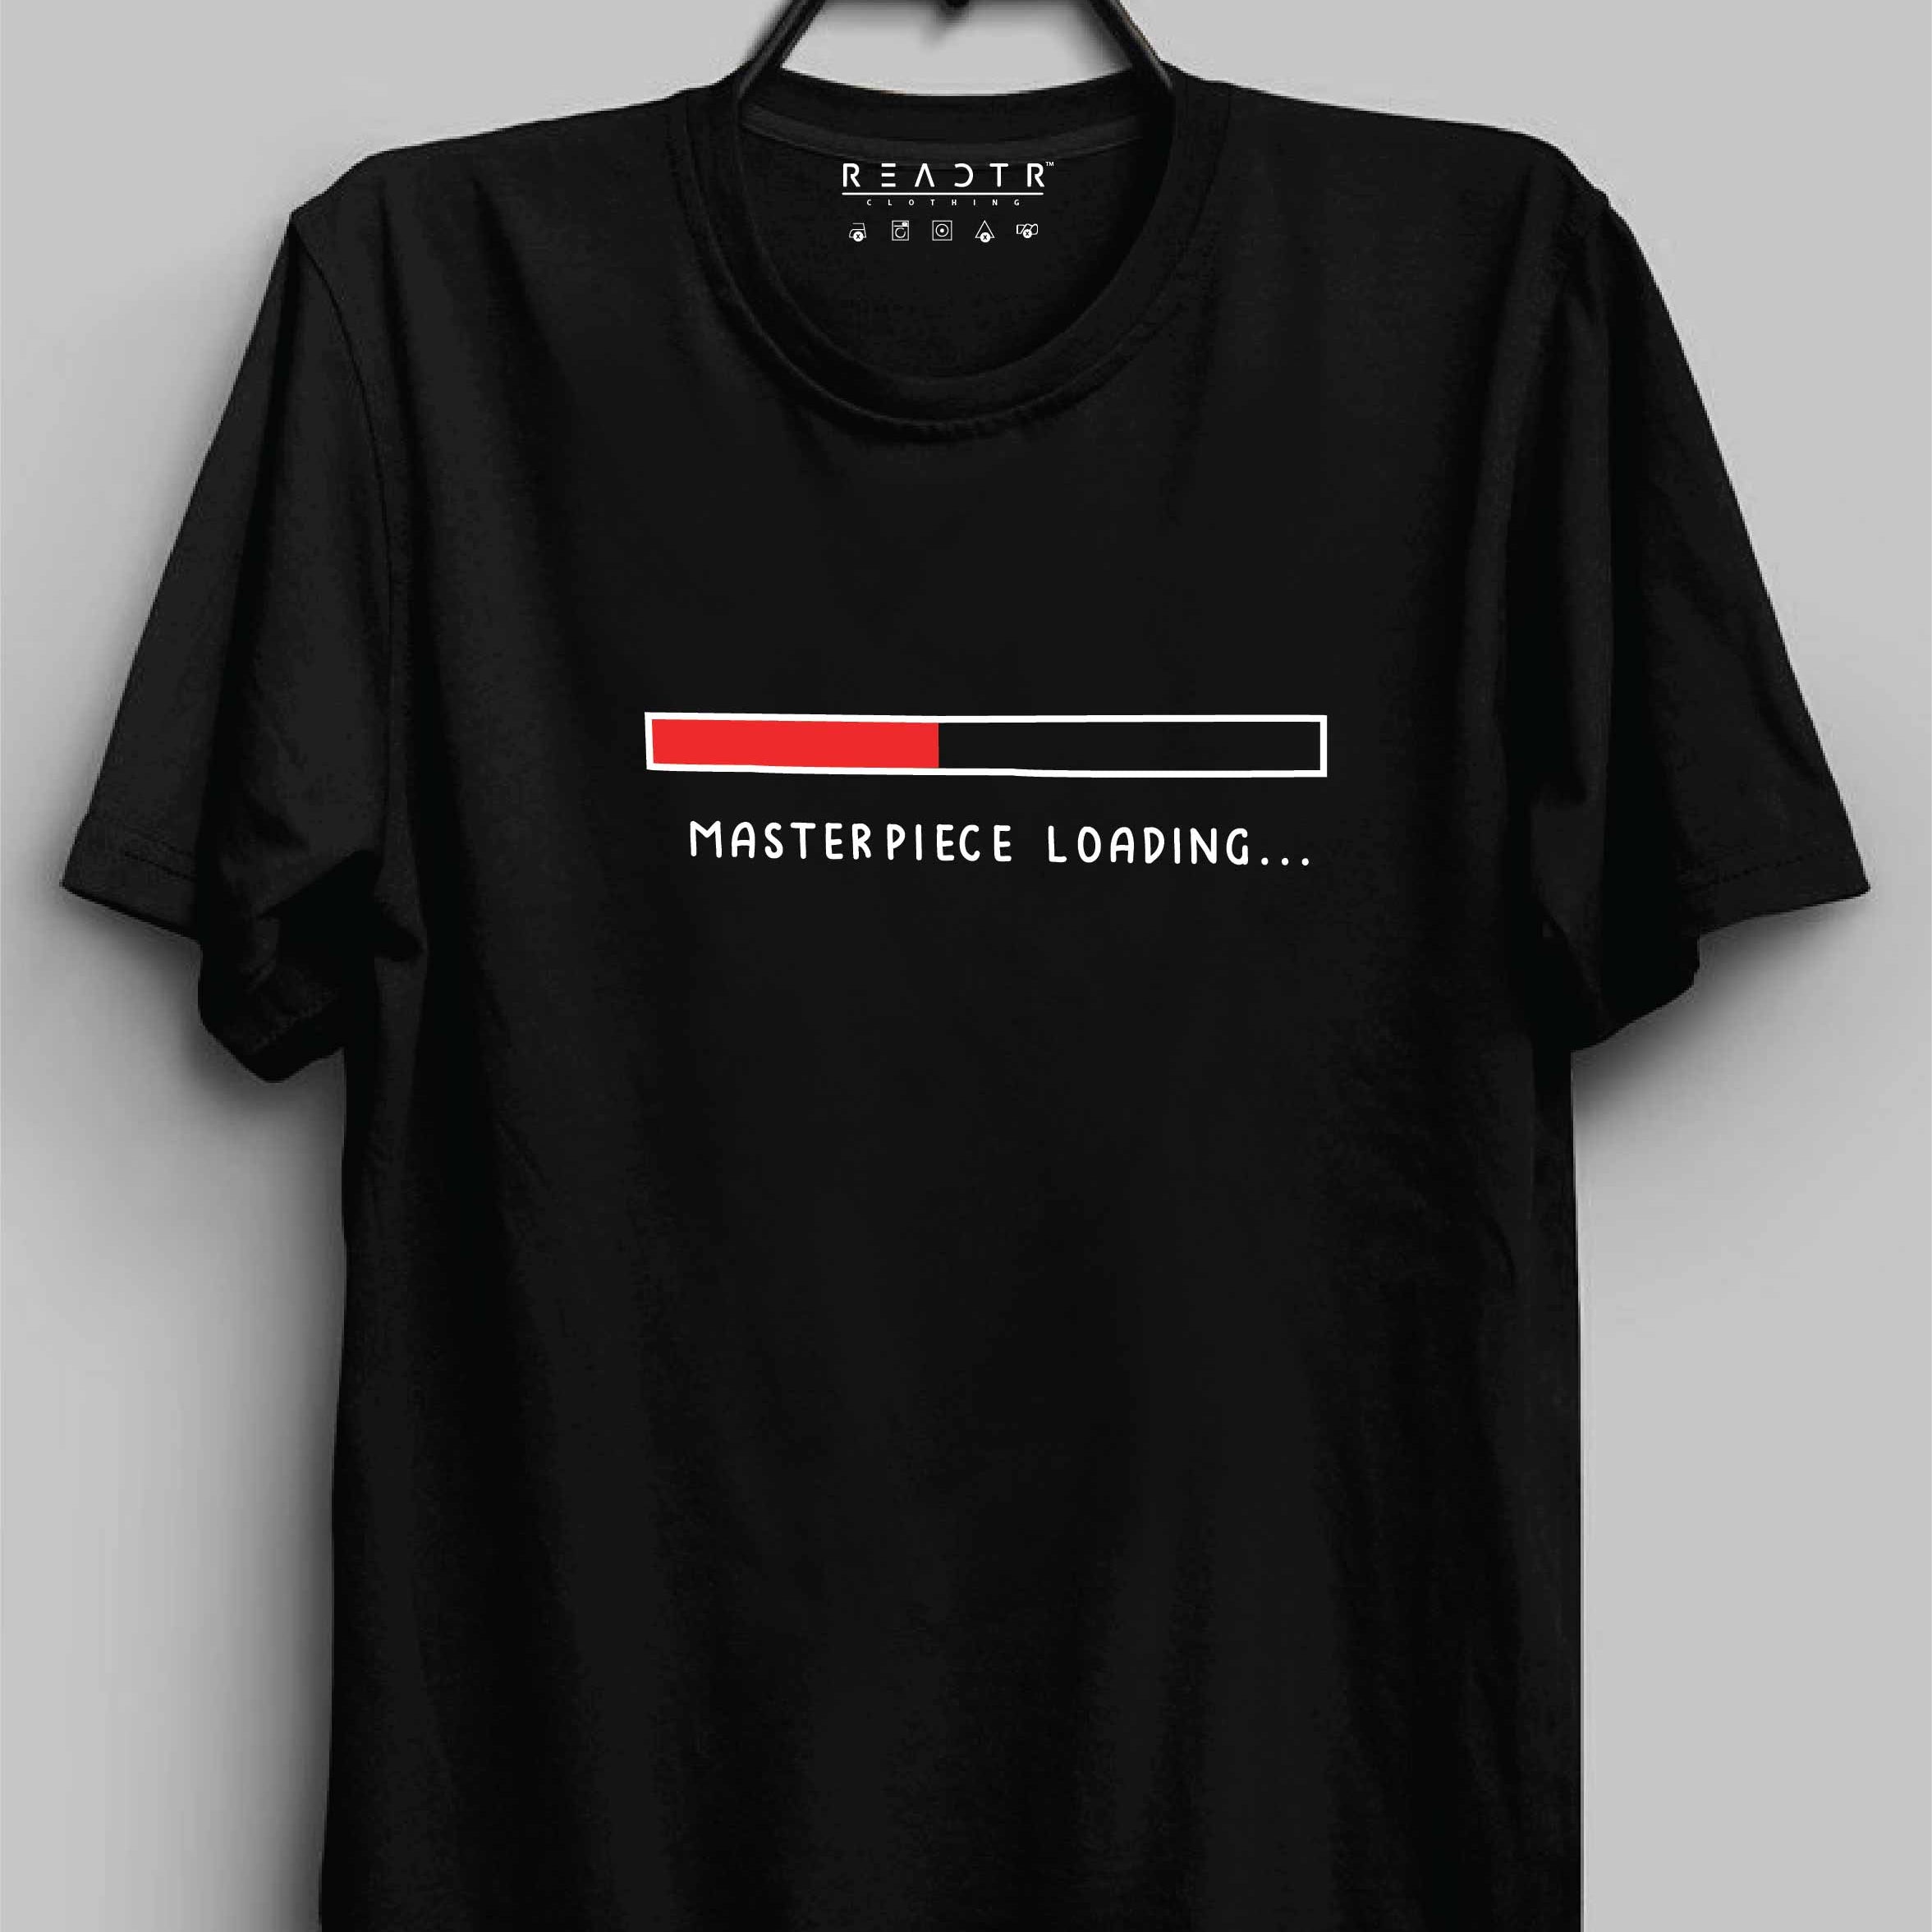 Masterpiece Loading Reactr Tshirts For Men - Eyewearlabs